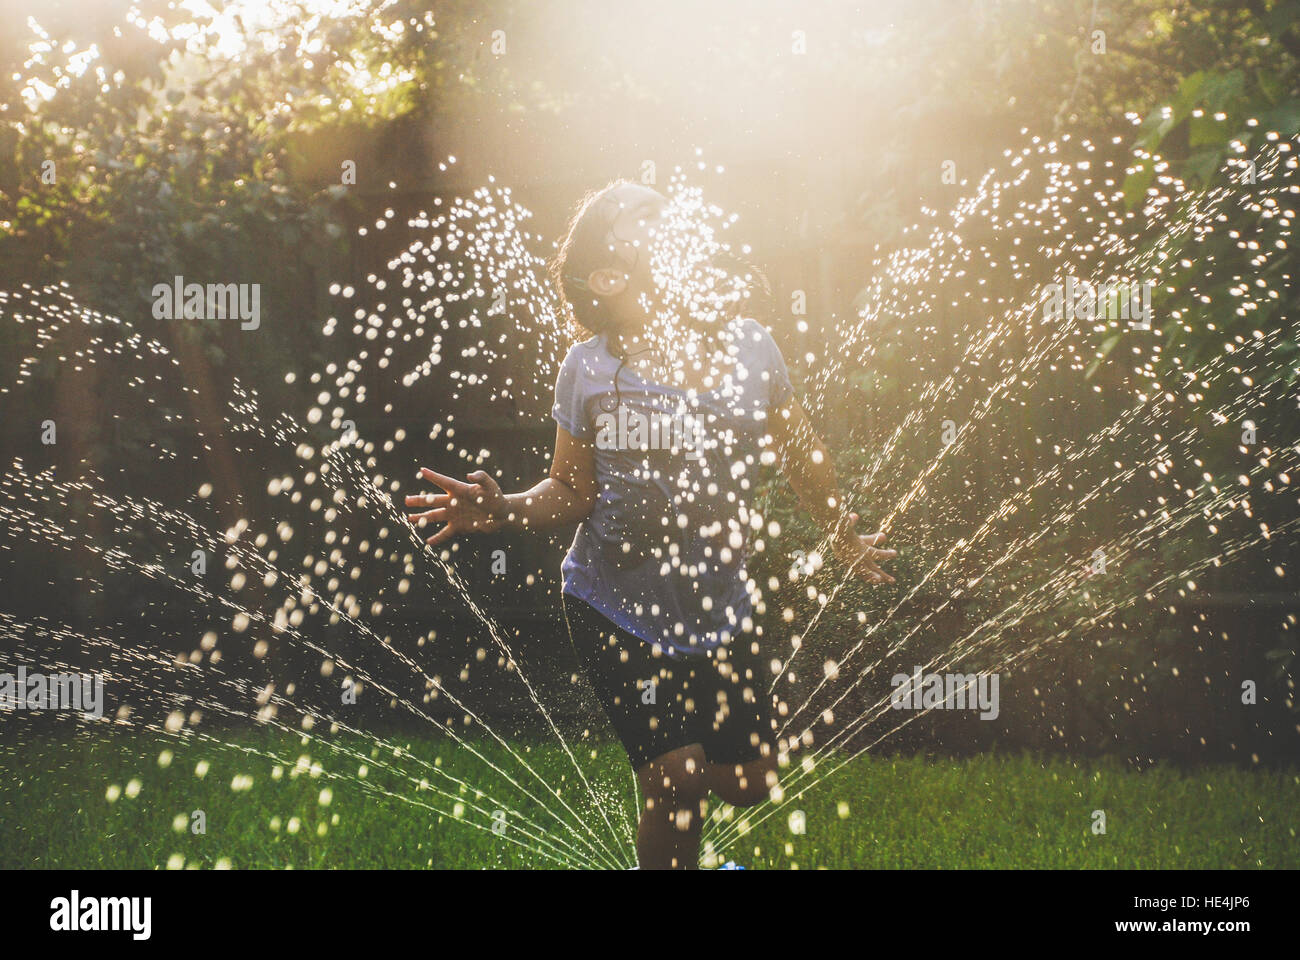 Ragazza che gioca in impianti sprinkler nella zona suburbana di backyard Foto Stock